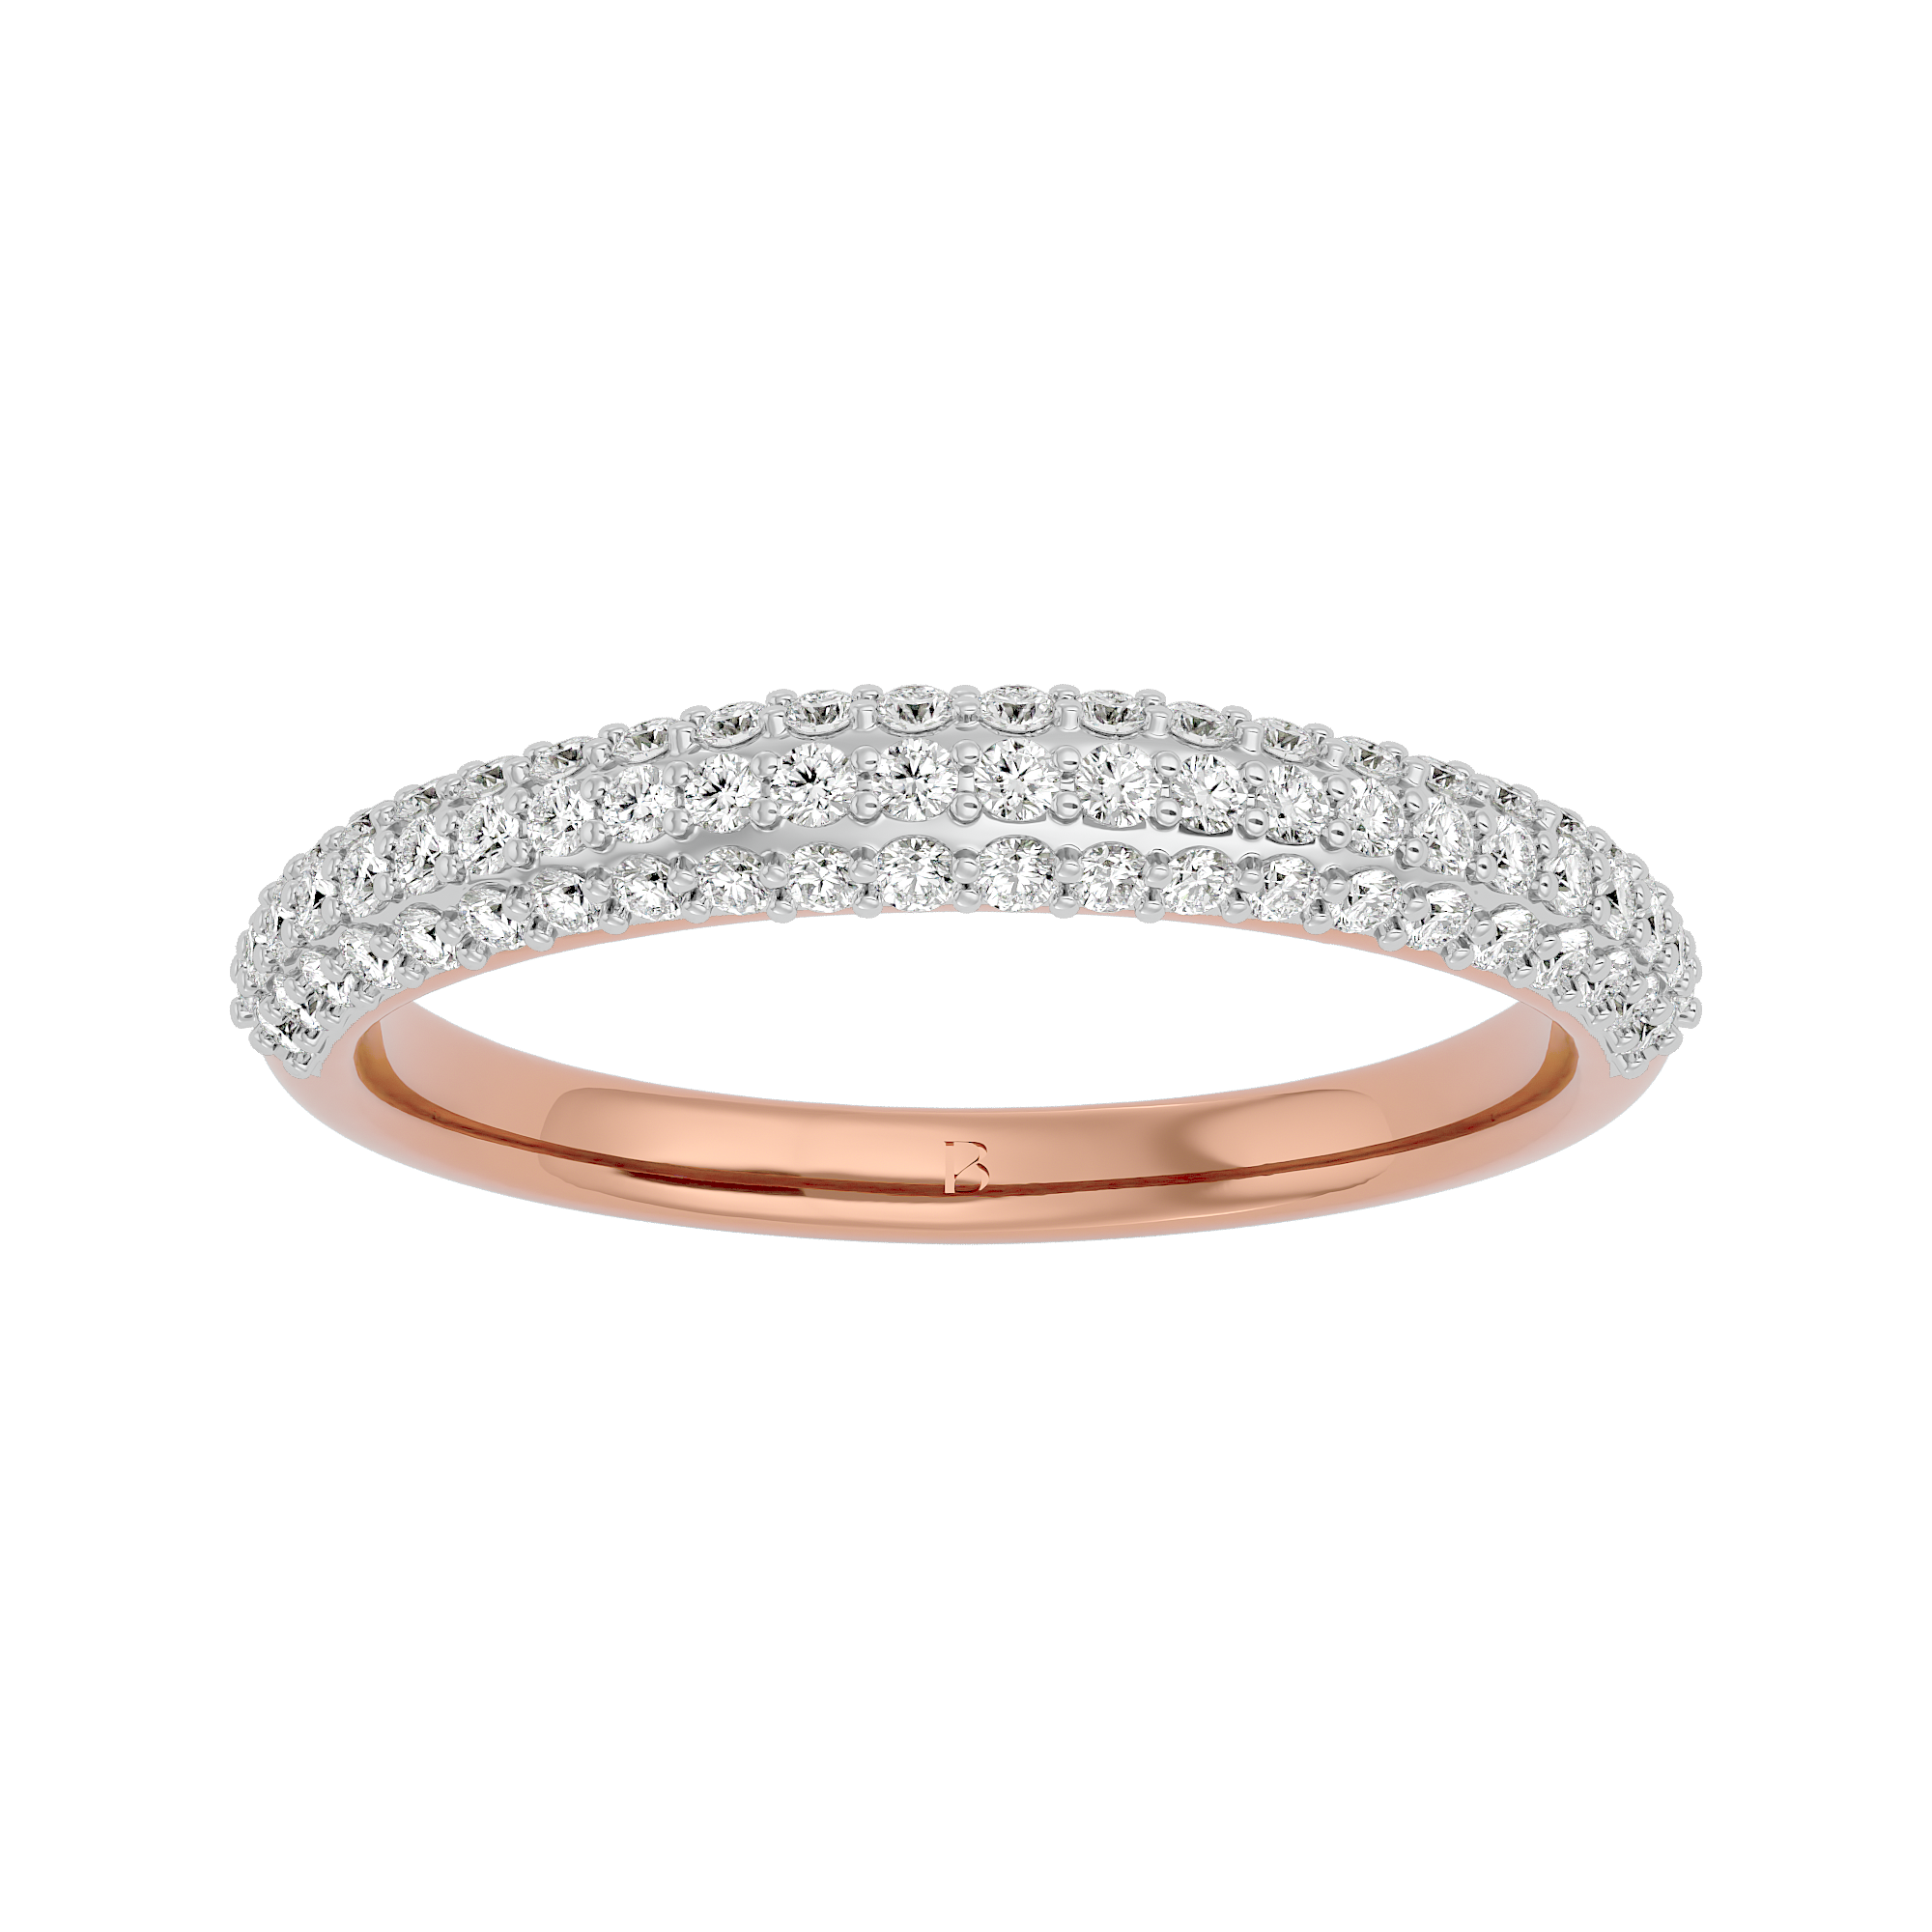 1 Carat Round Cut Diamond Ring in Rose Gold - Blu Diamonds